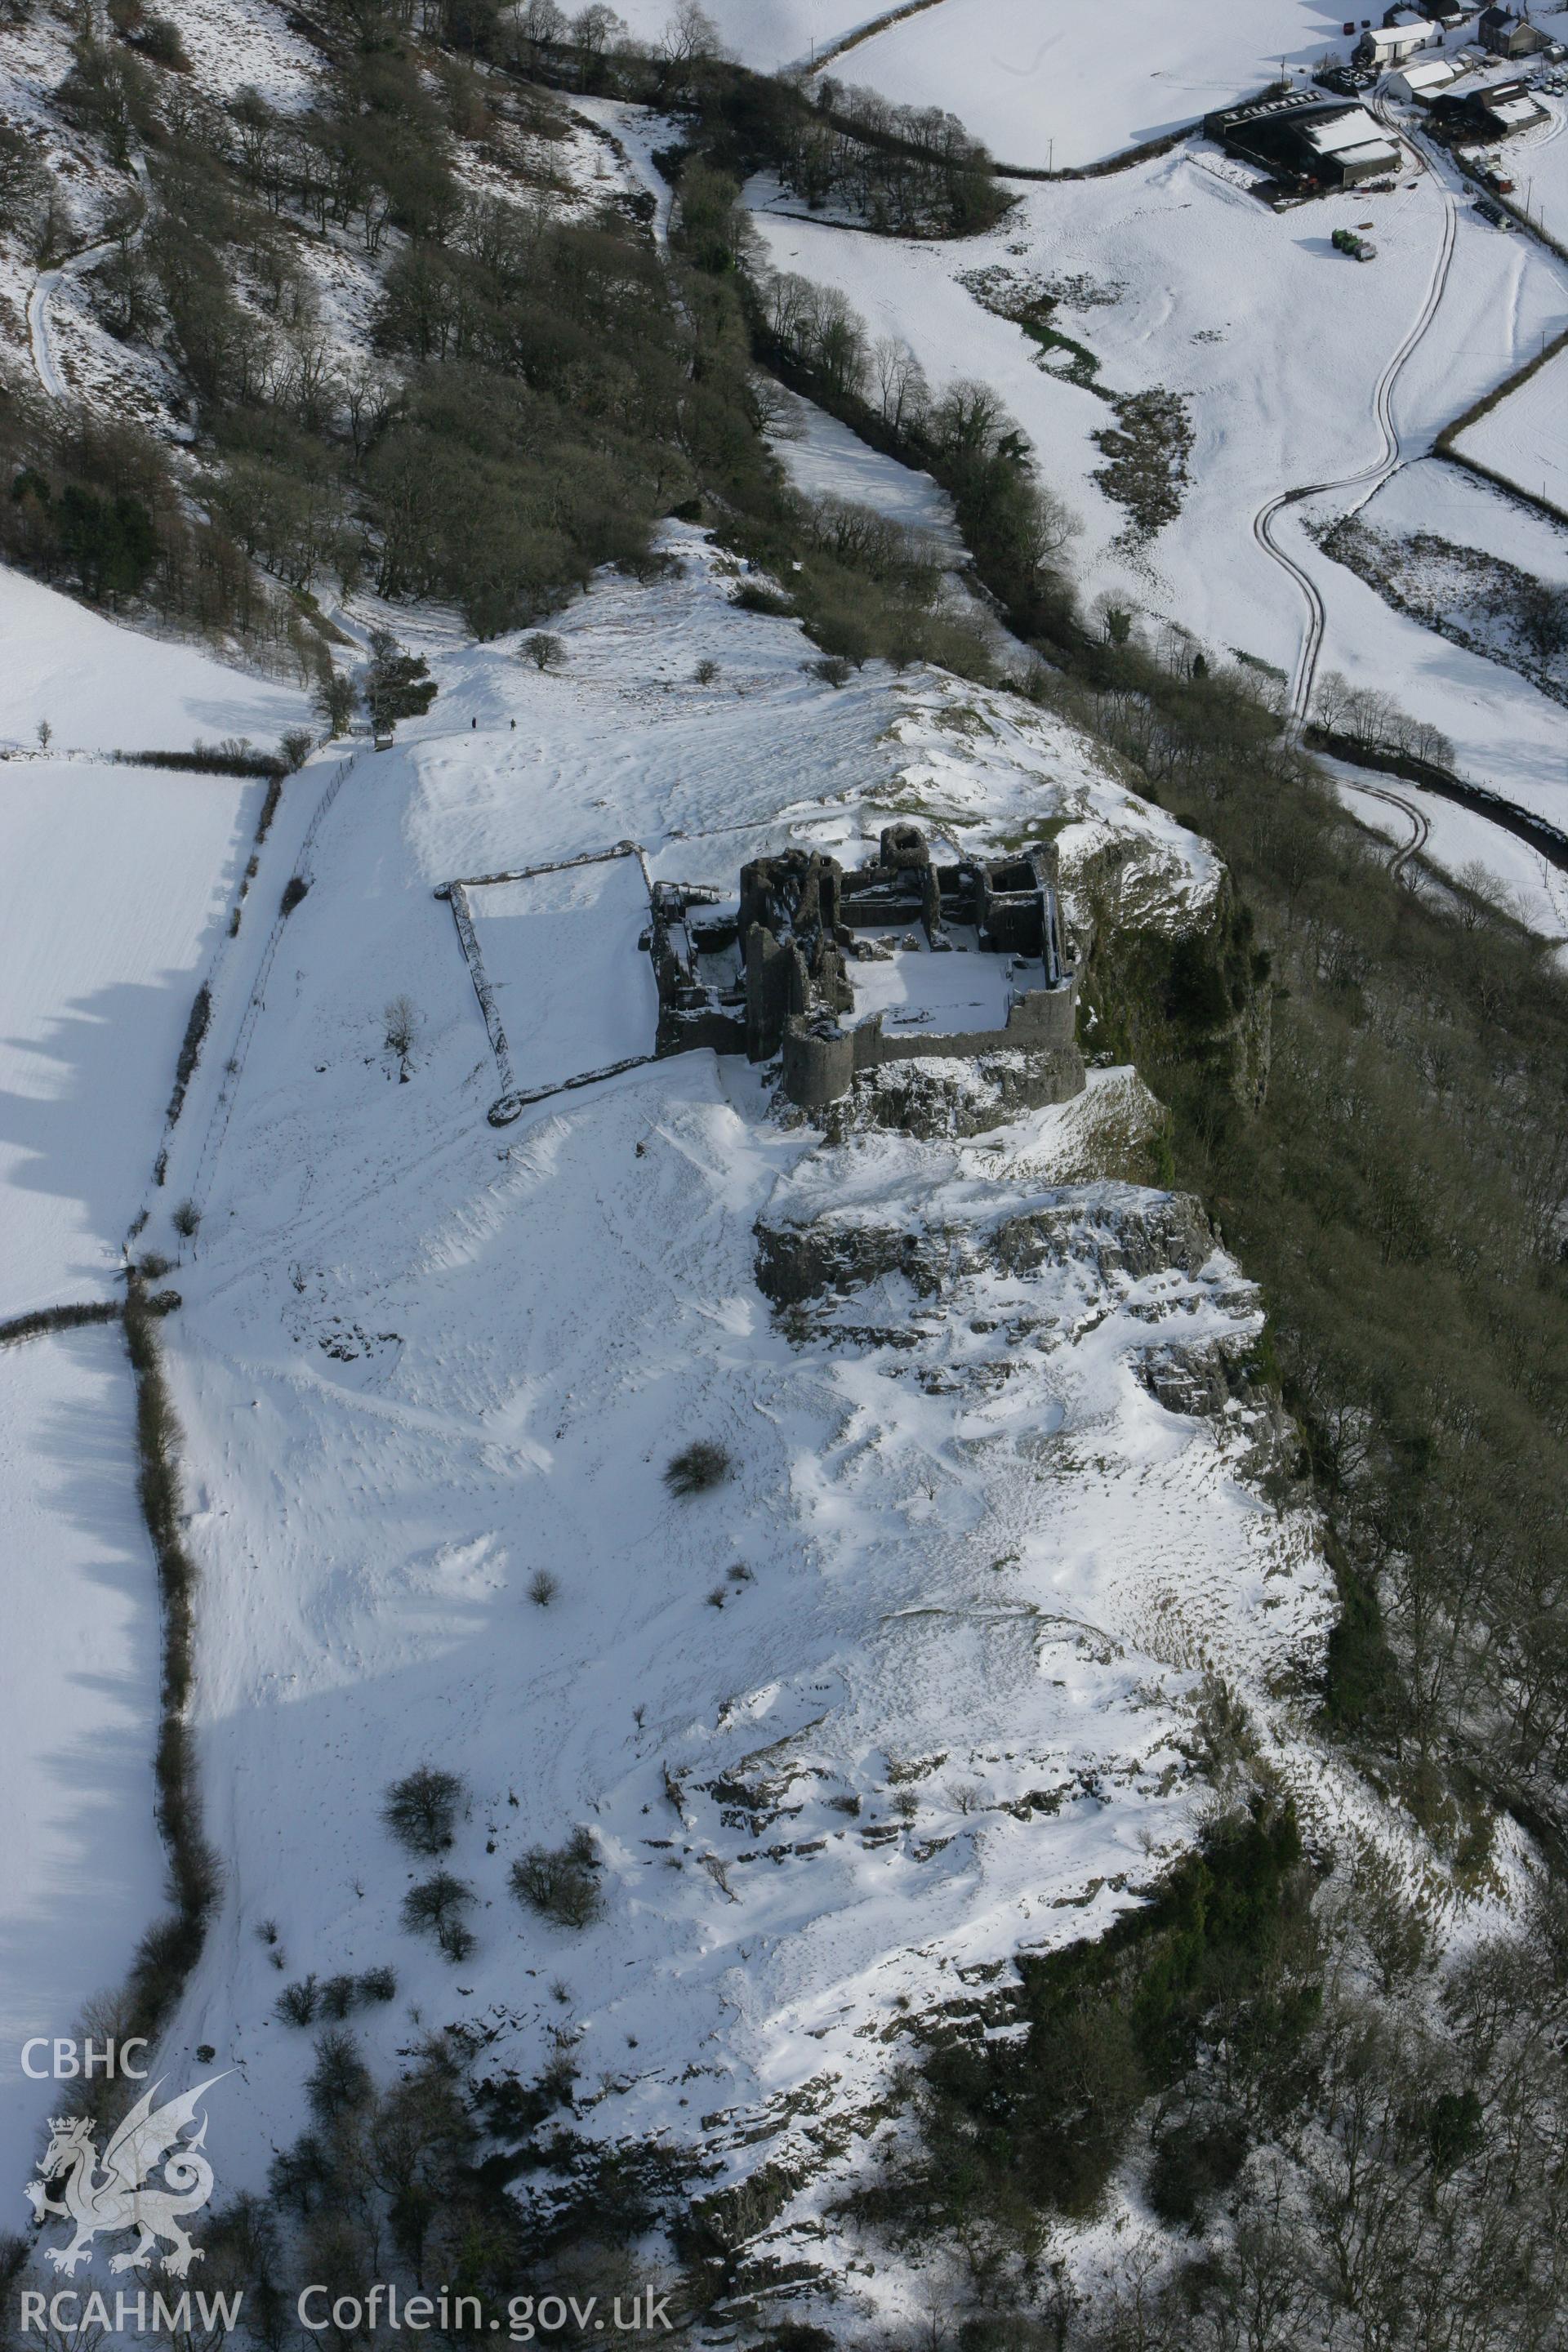 RCAHMW colour oblique photograph of Carreg Cennan Castle, under snow. Taken by Toby Driver on 06/02/2009.